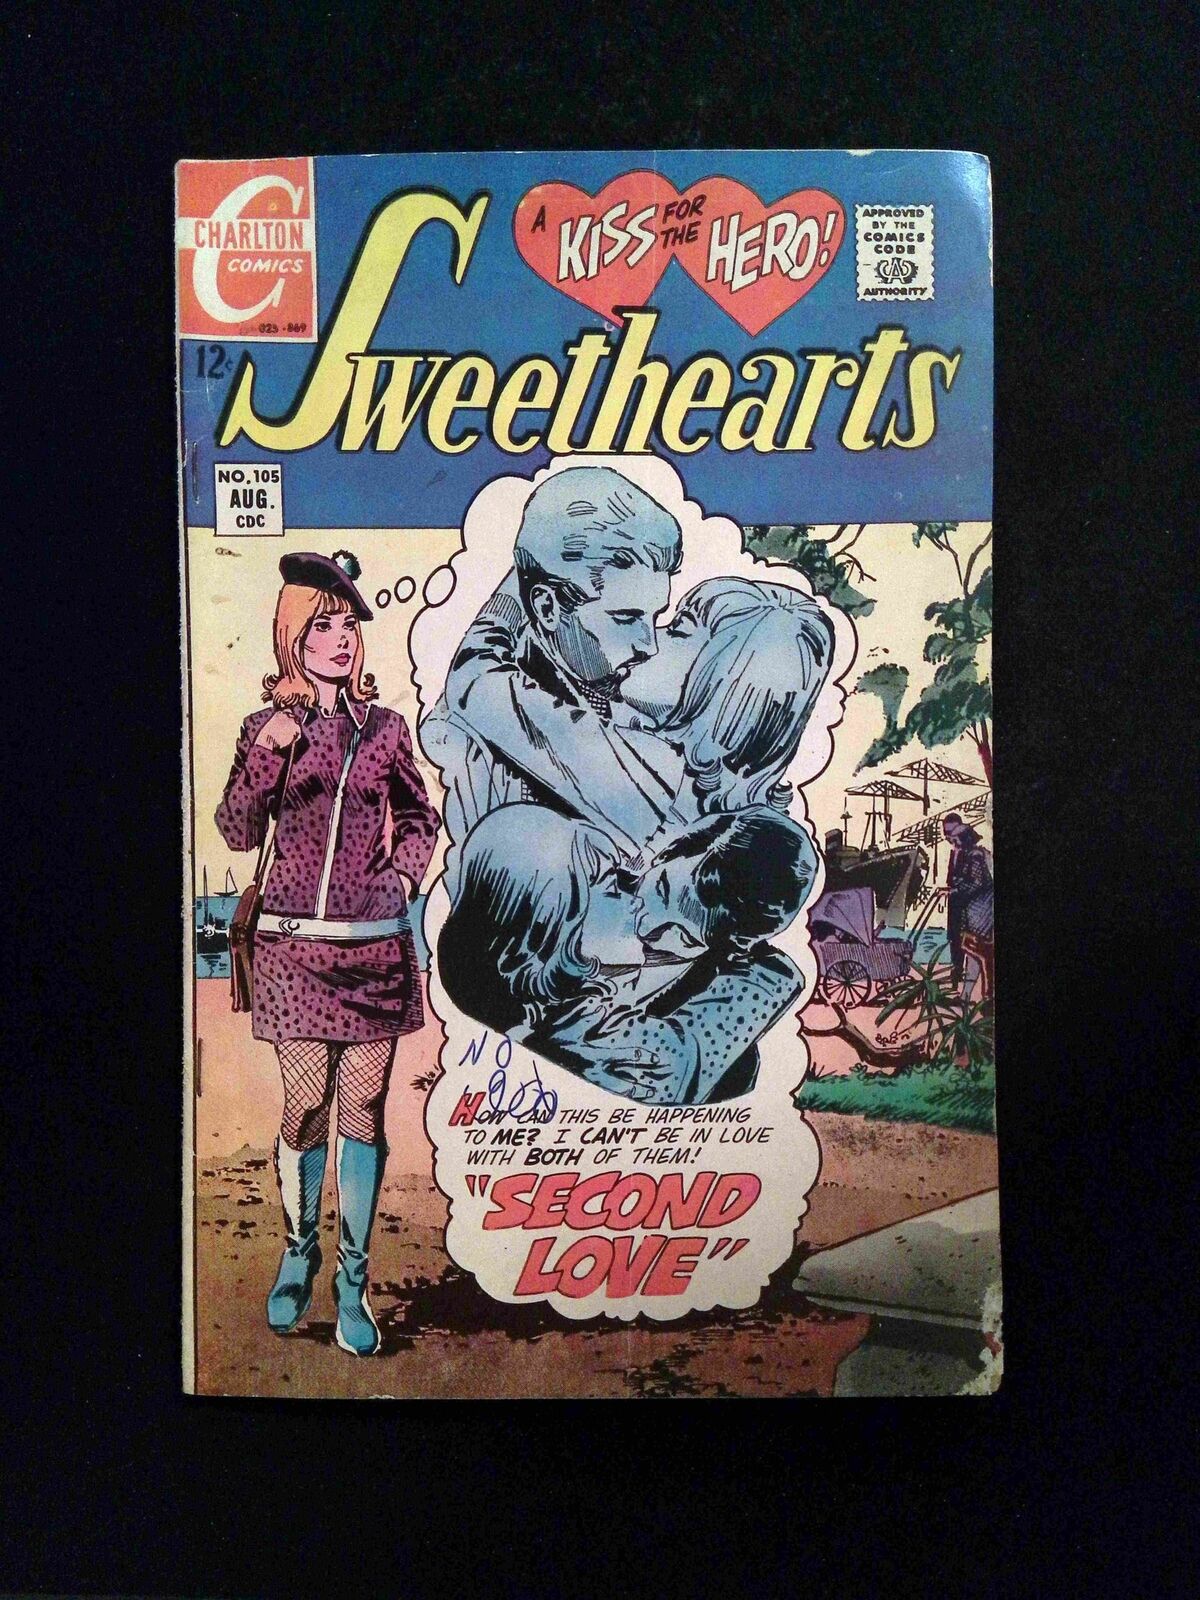 Sweethearts Vol.2 #105  CHARLTON  Comics 1969 VG/FN